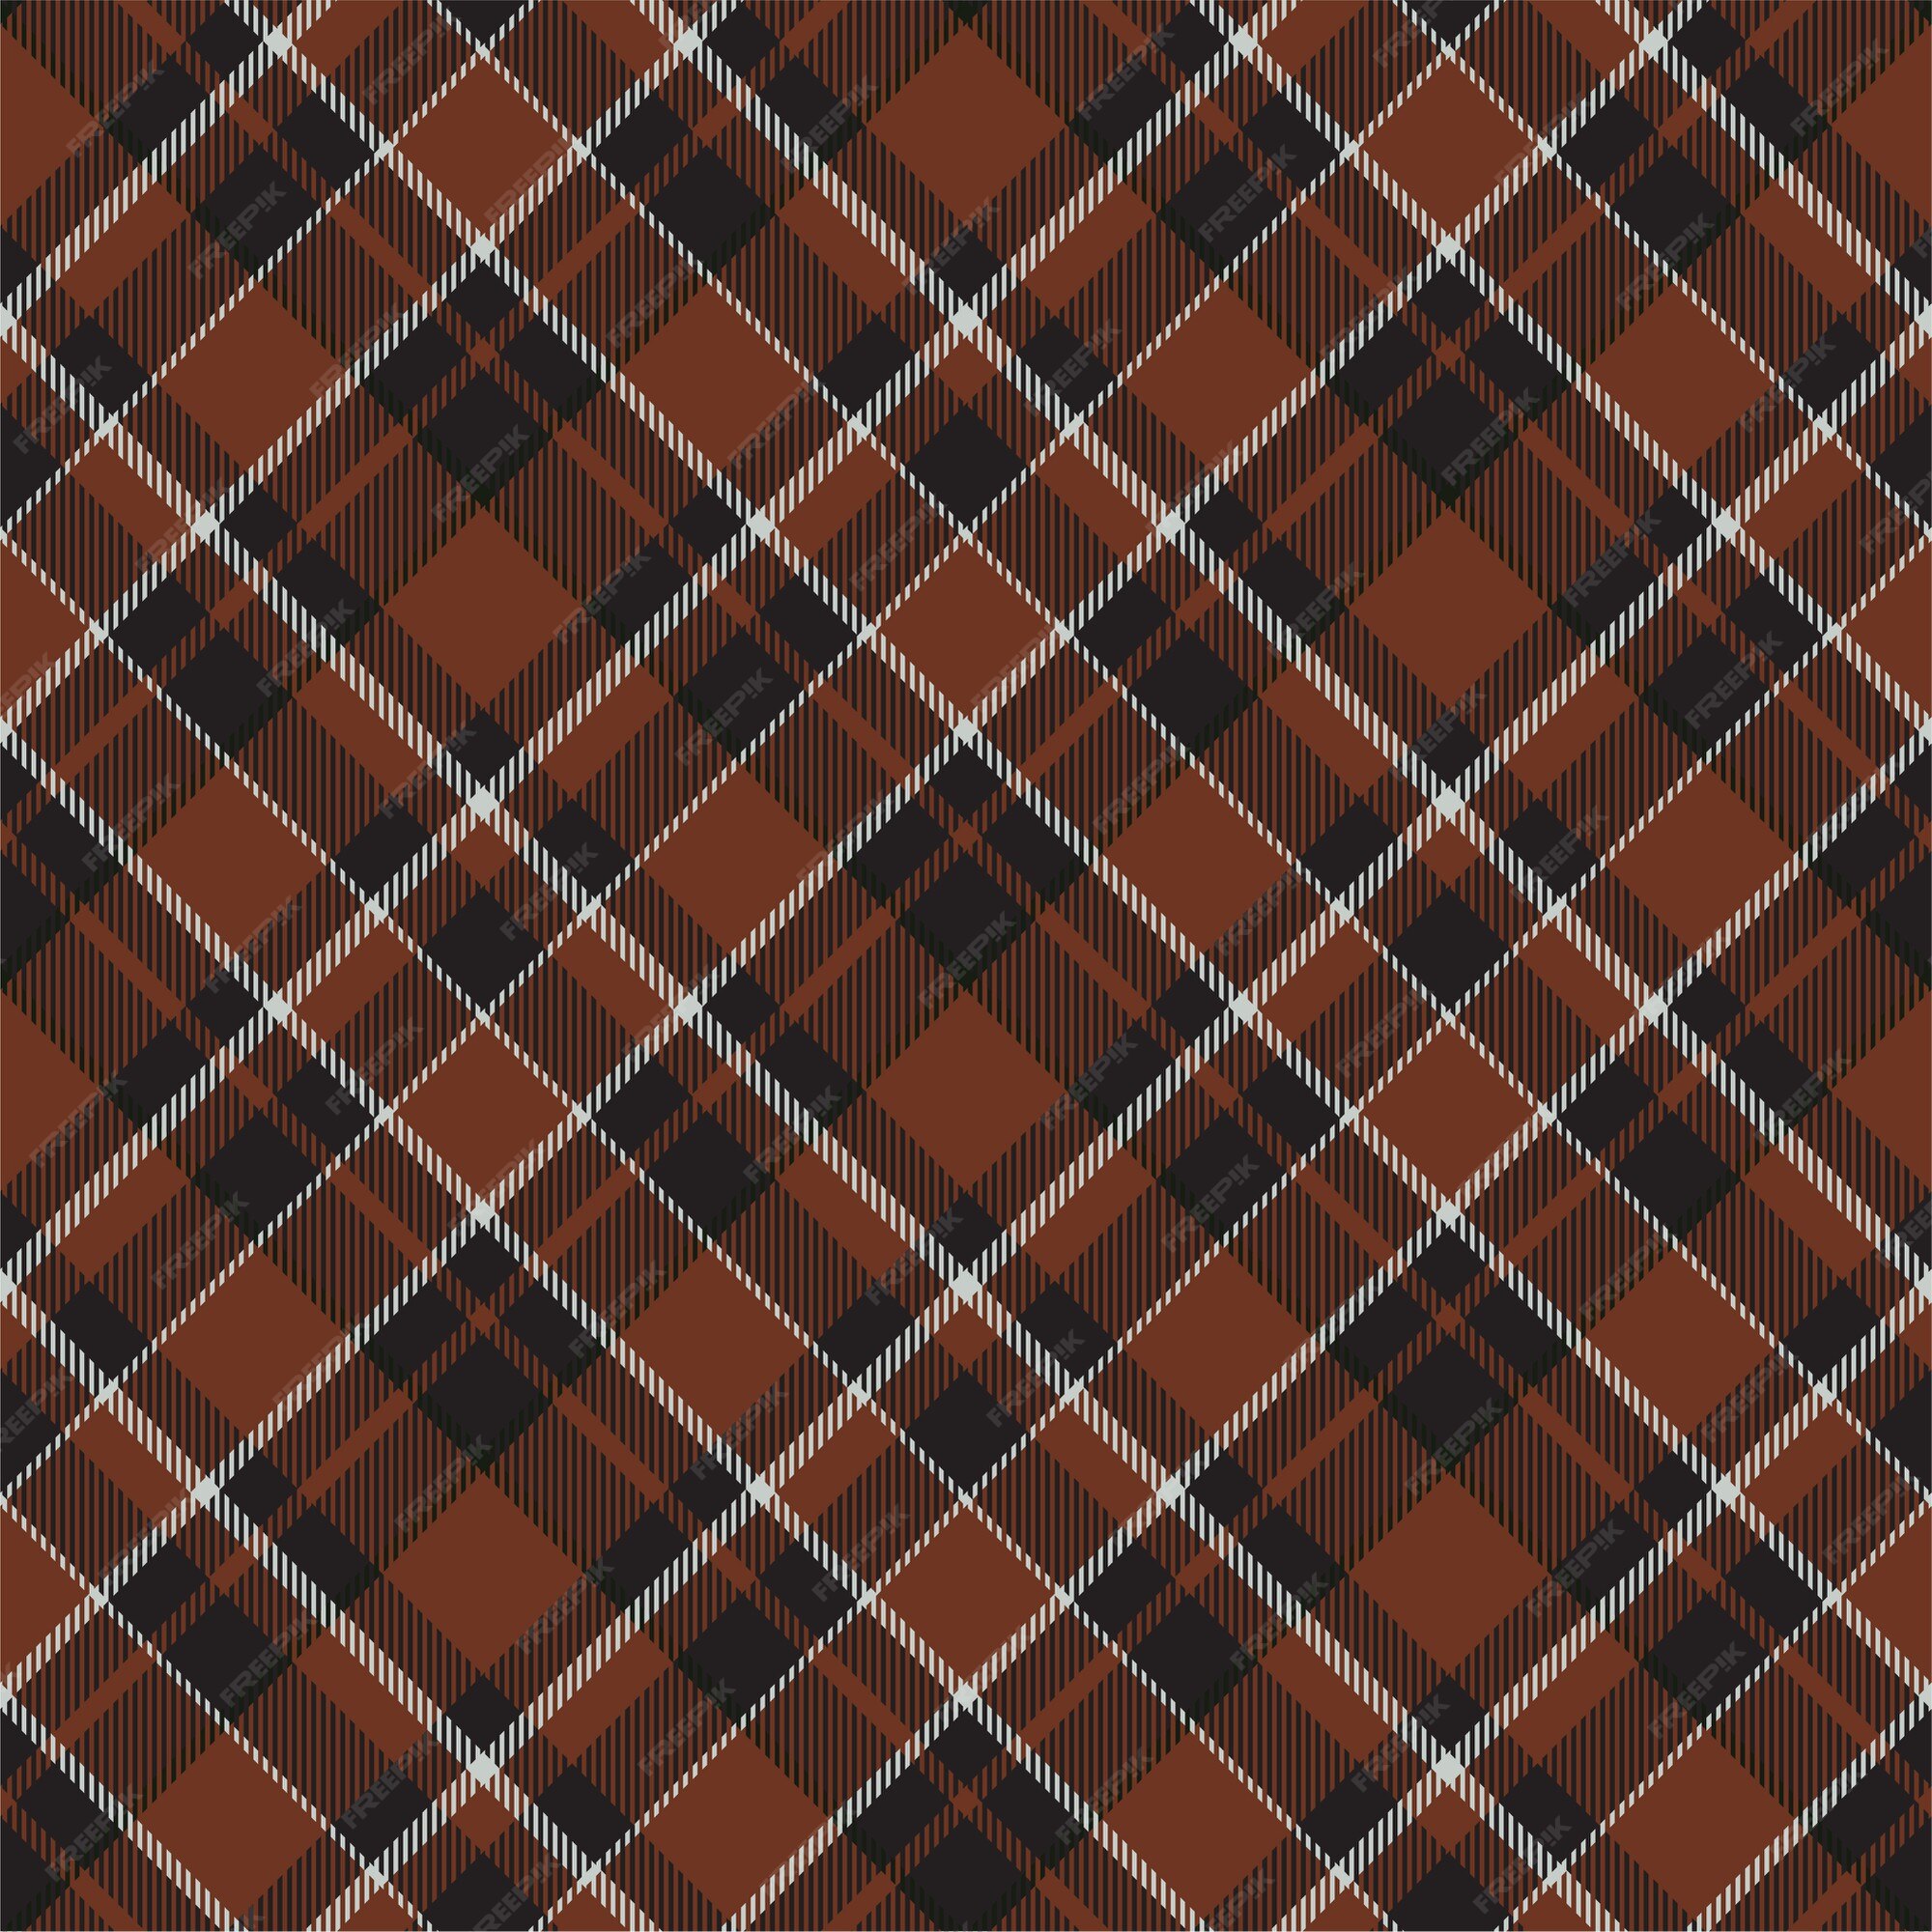 Padrões Sem Costura Tartan Alegre Natal Textura Xadrez Tecido Escocês  imagem vetorial de rwgusev© 613739704